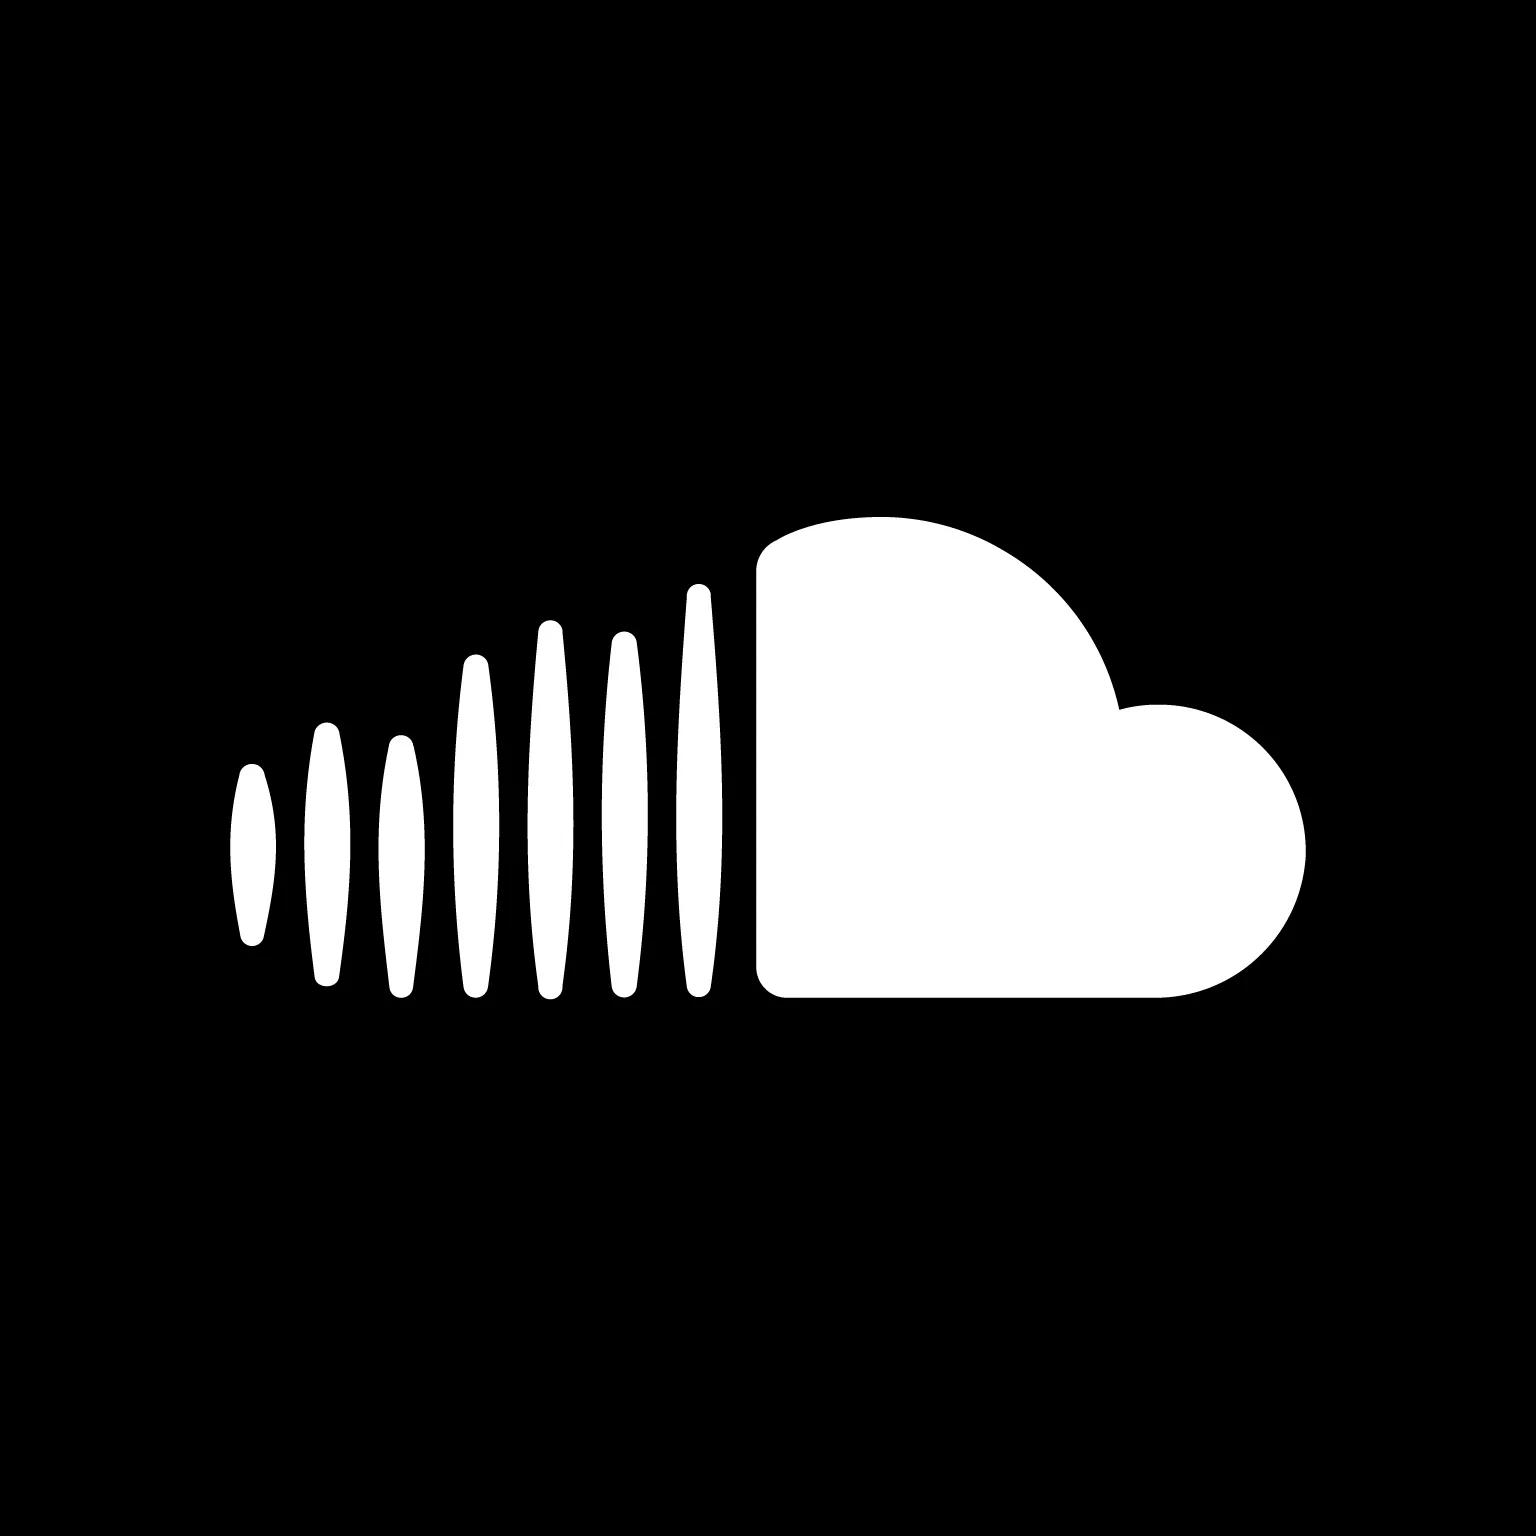 Soundcloud logo white
